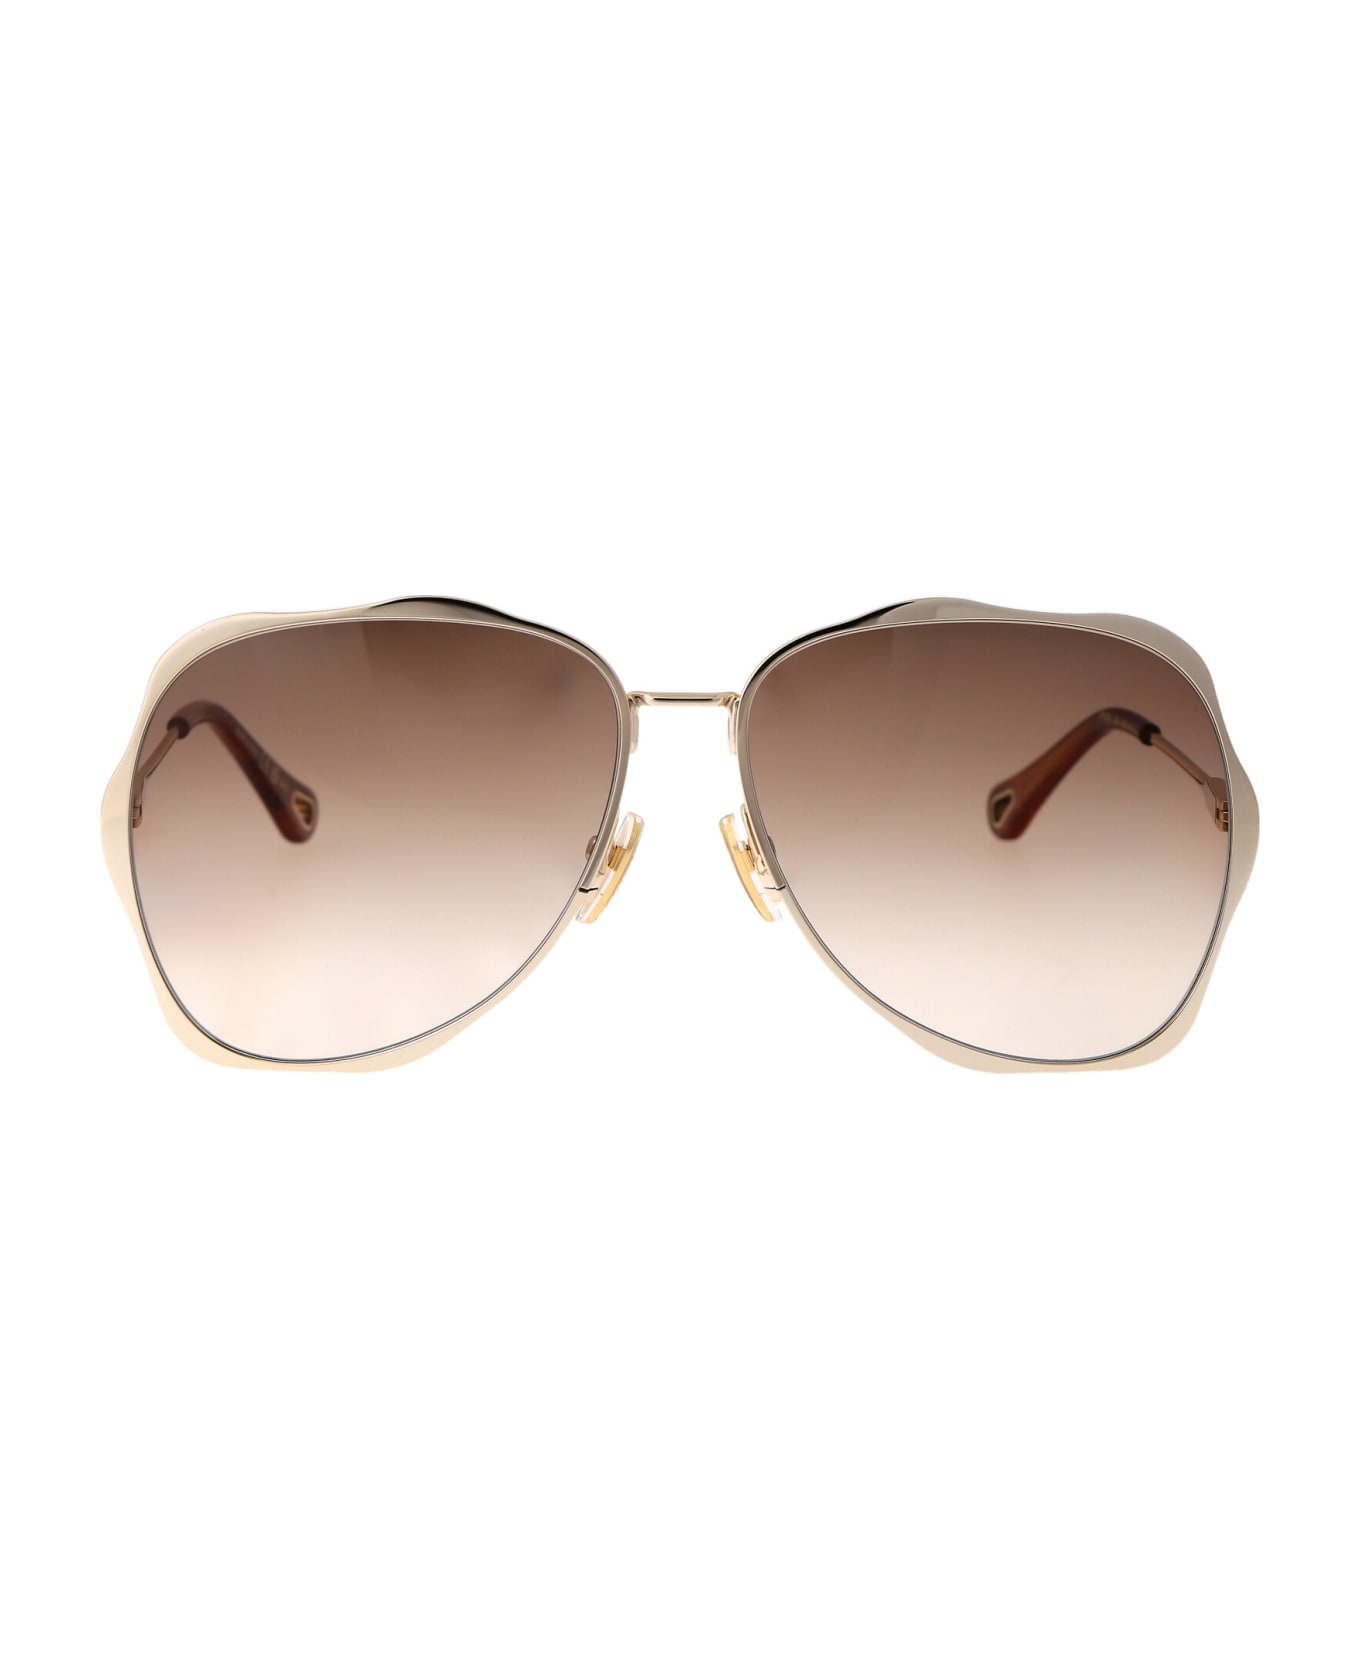 Chloé Eyewear Ch0177s Sunglasses - 002 GOLD GOLD BROWN サングラス